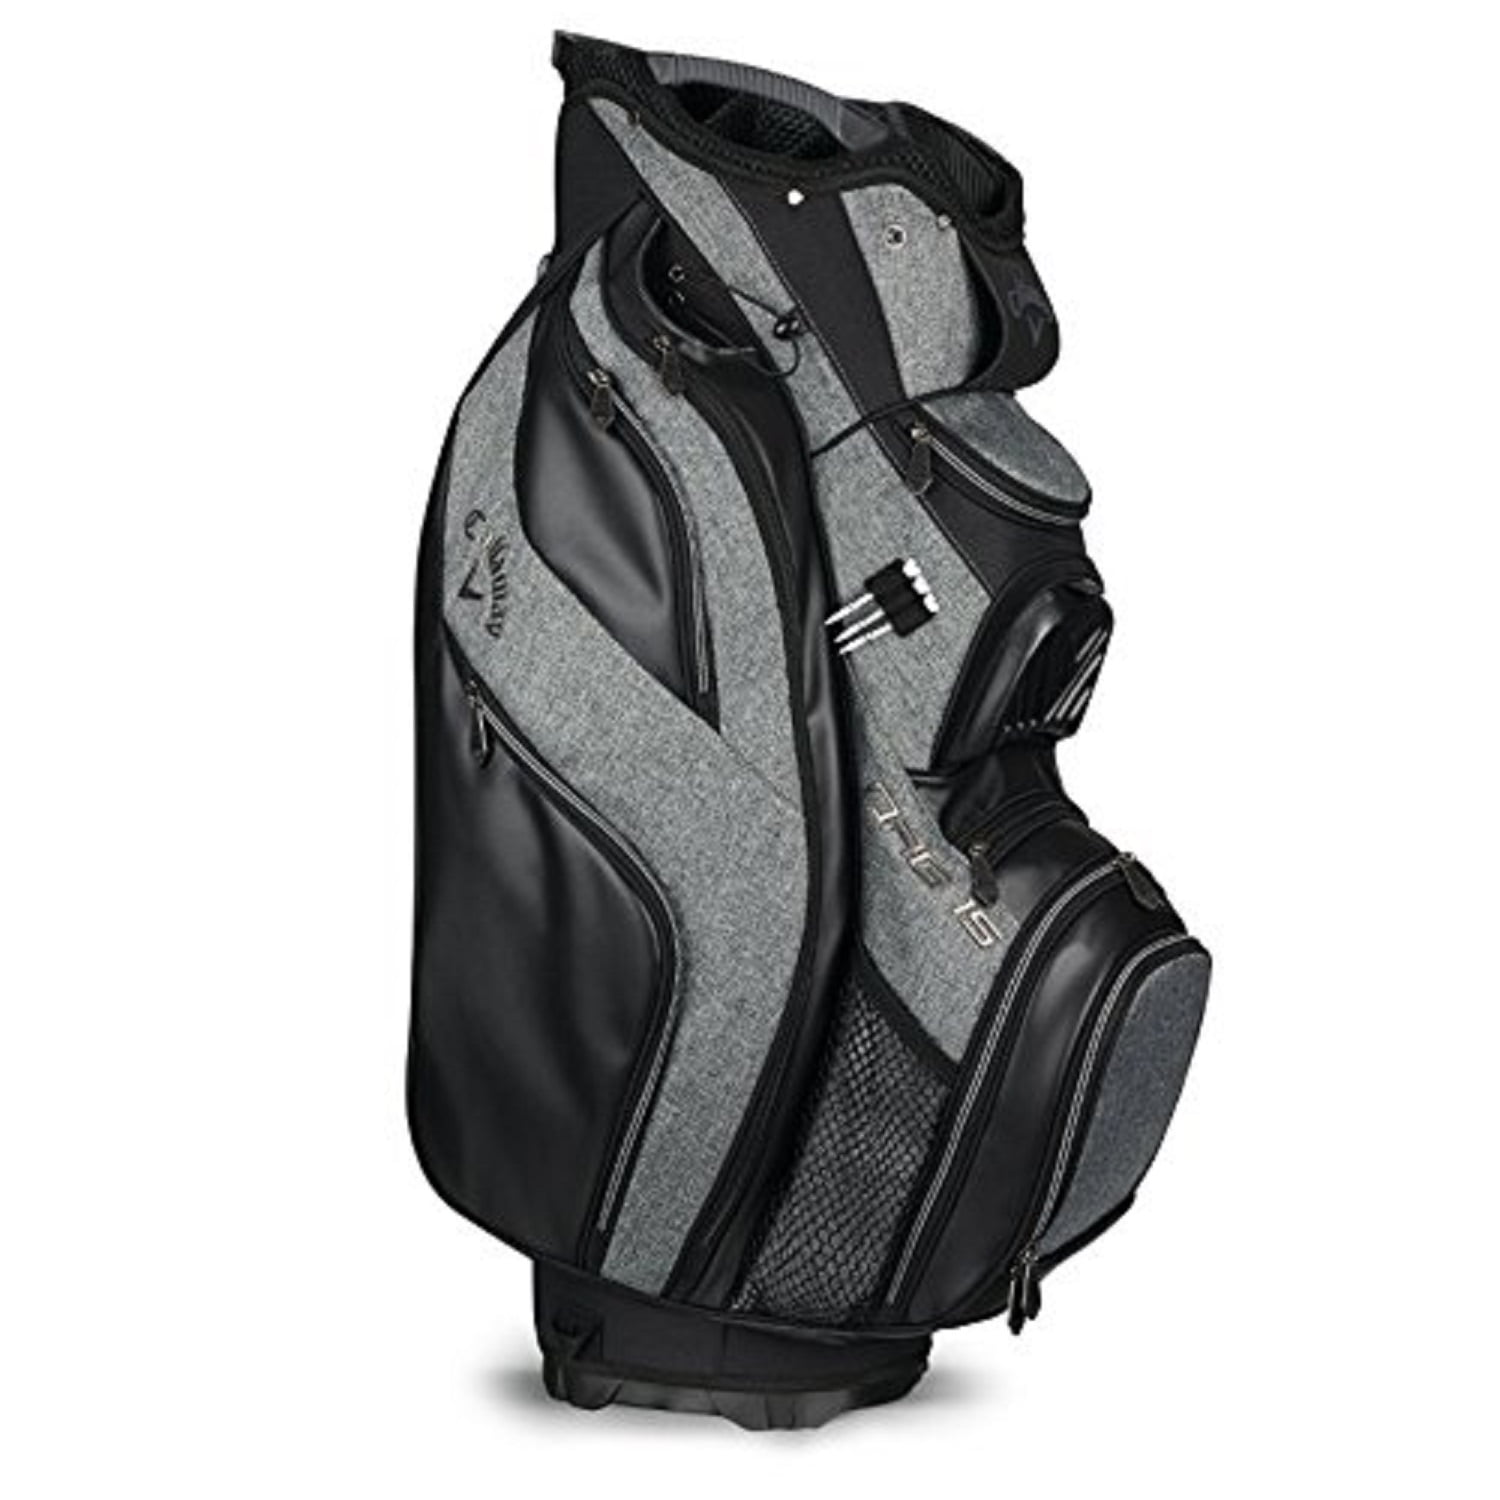 Callaway ORG 15 Cart Bag - Black/Titanium/Silver 